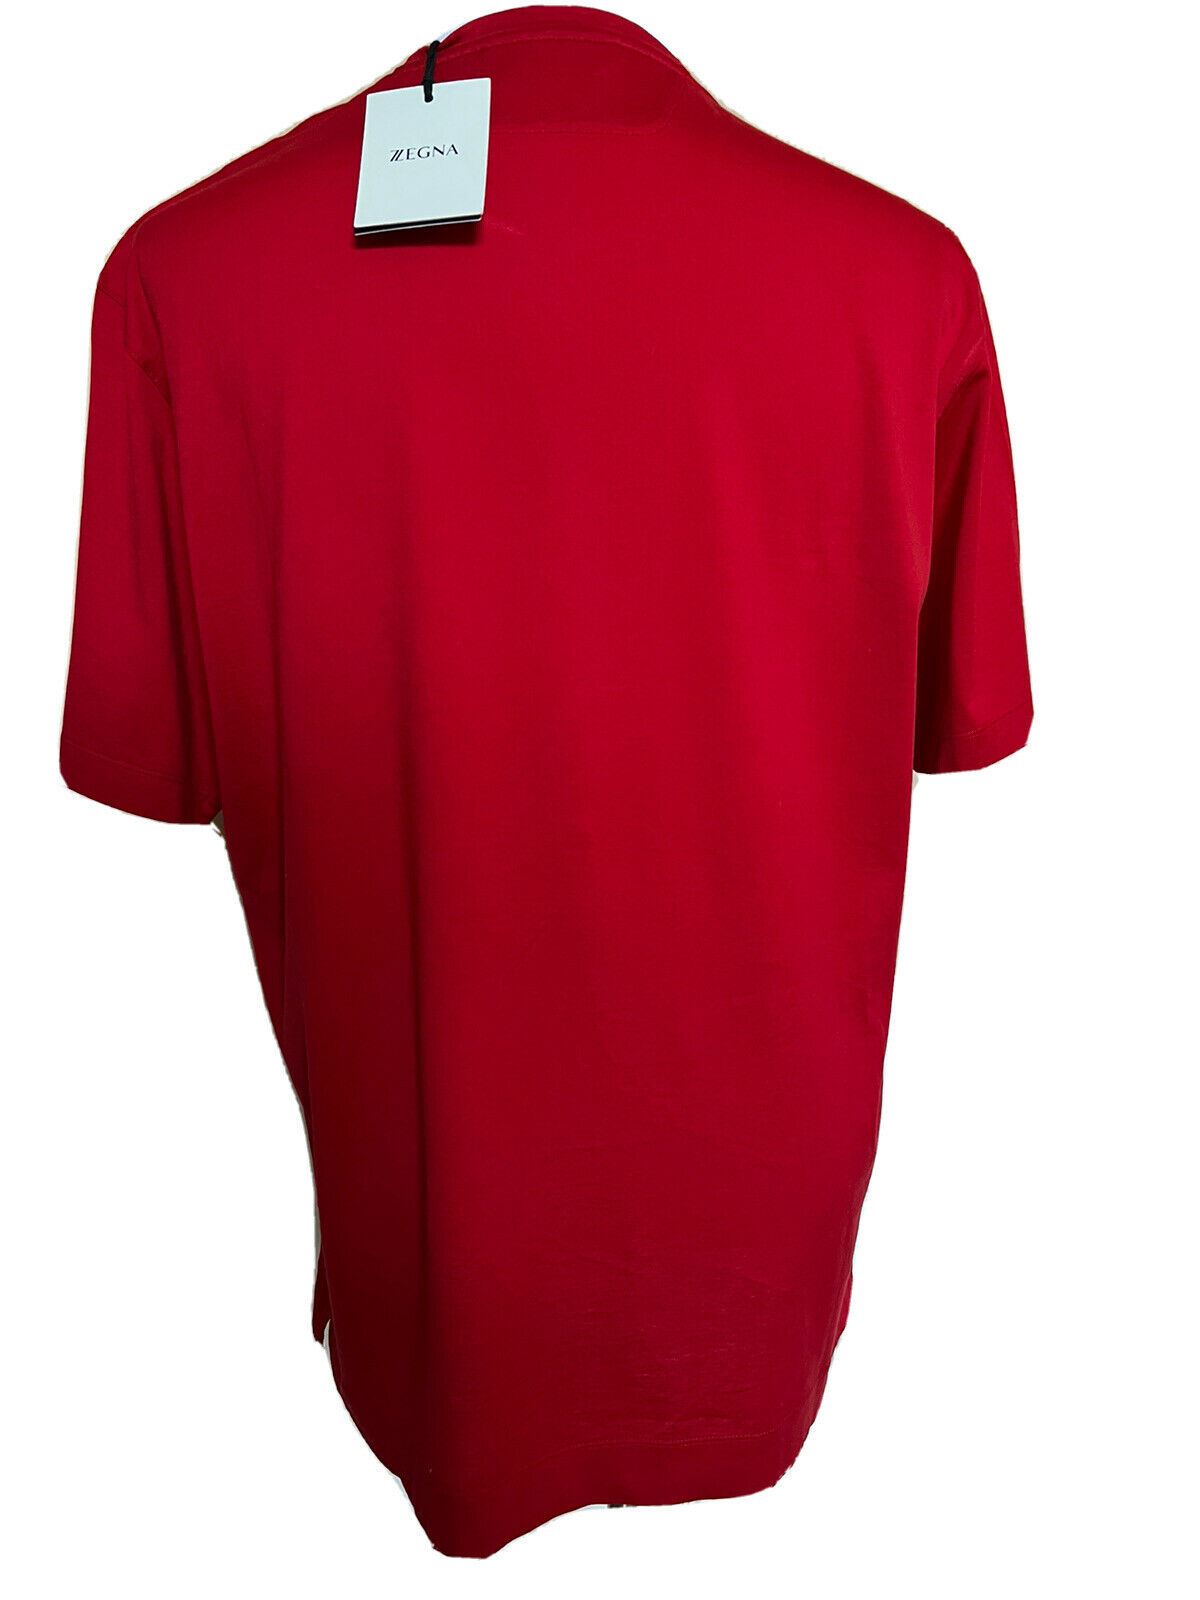 NWT $325 ZZEGNA Crewneck Red T-Shirt XL ZZF630